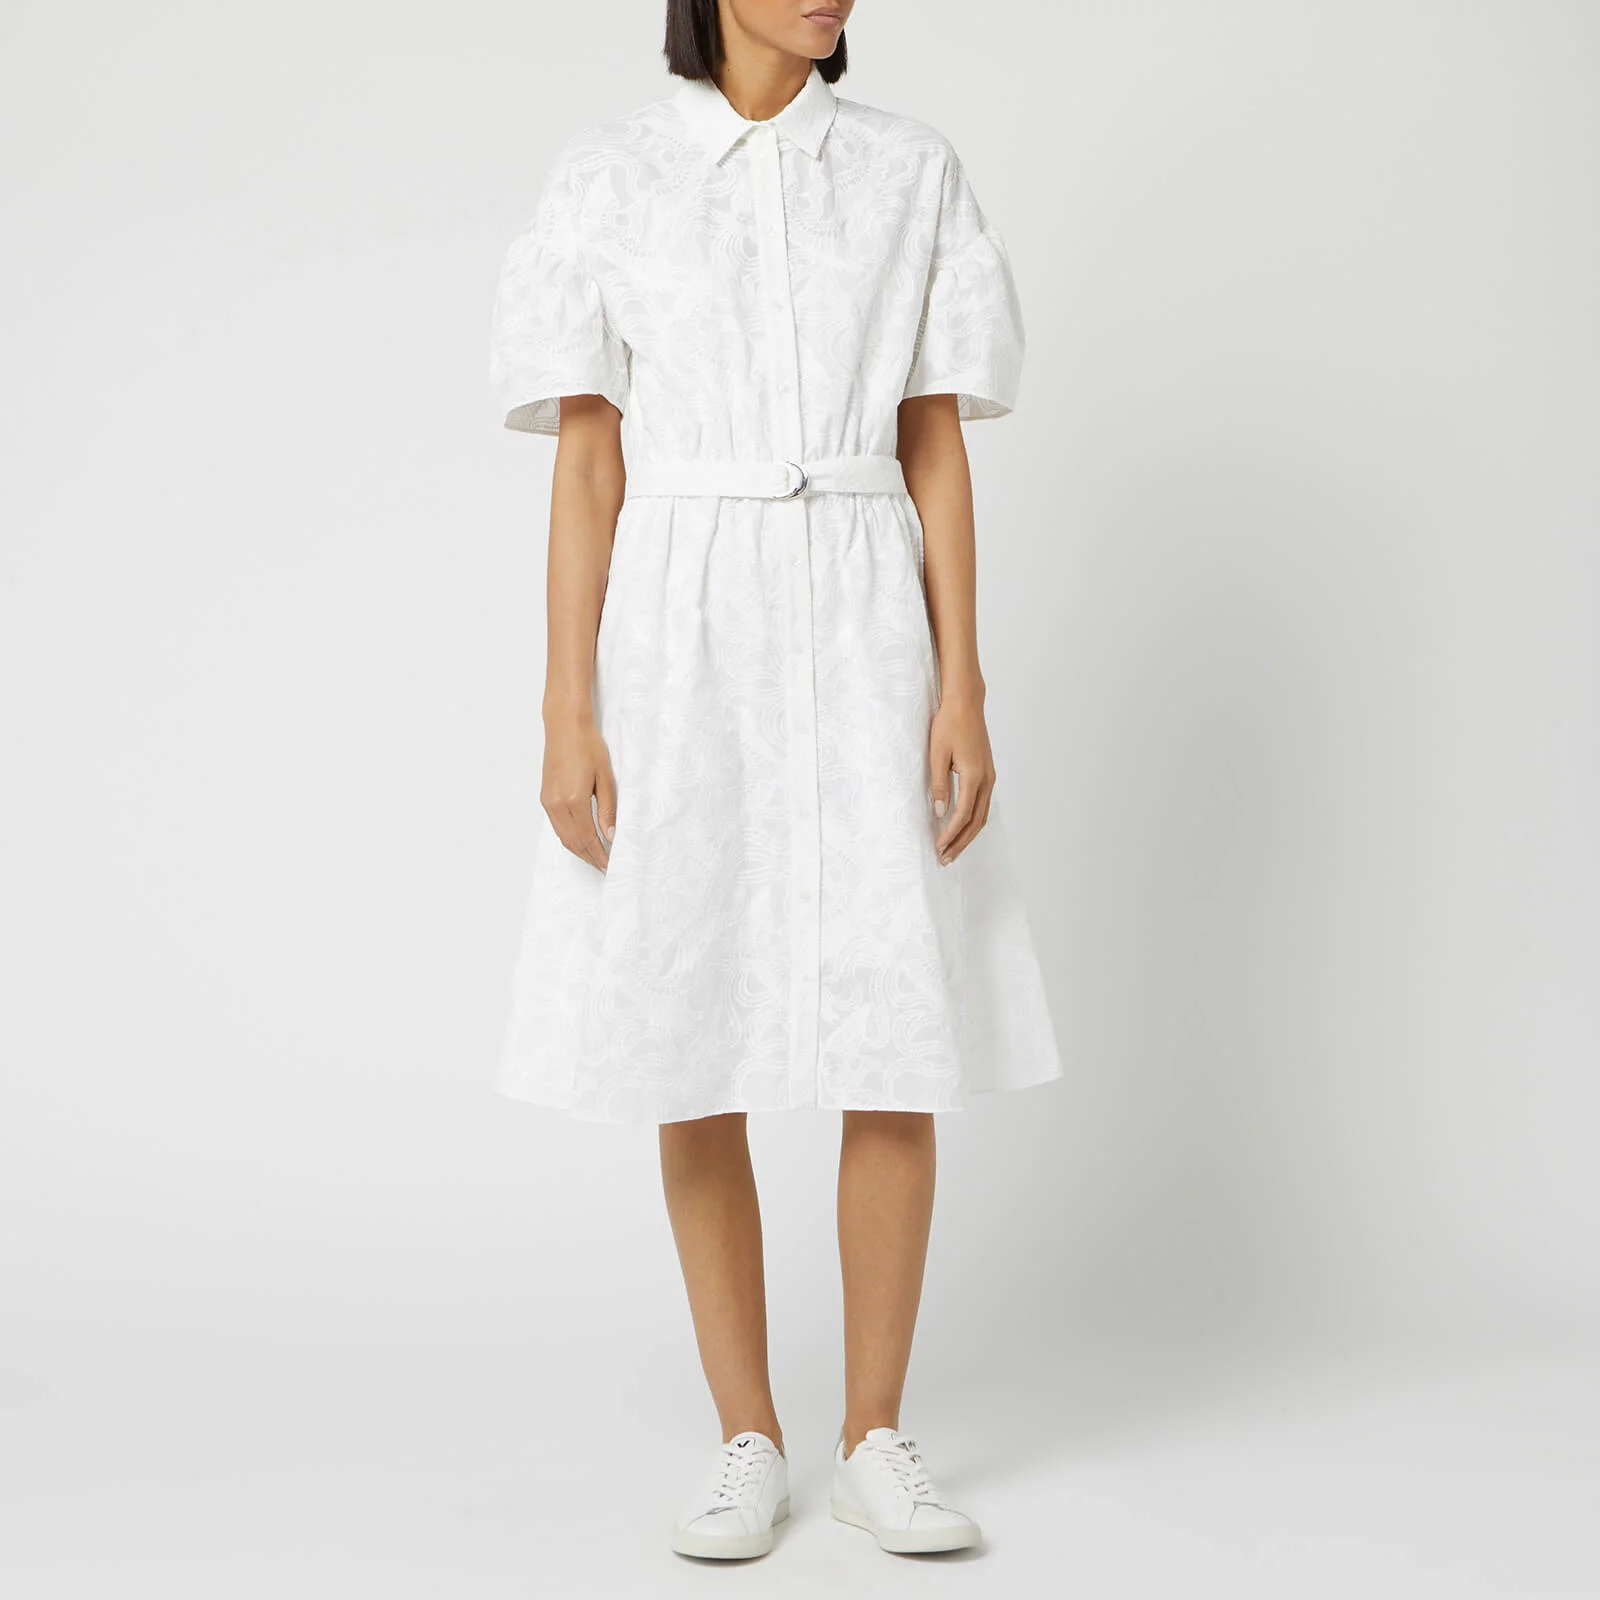 KENZO Women's Shirting Belted Dress - White Image 1